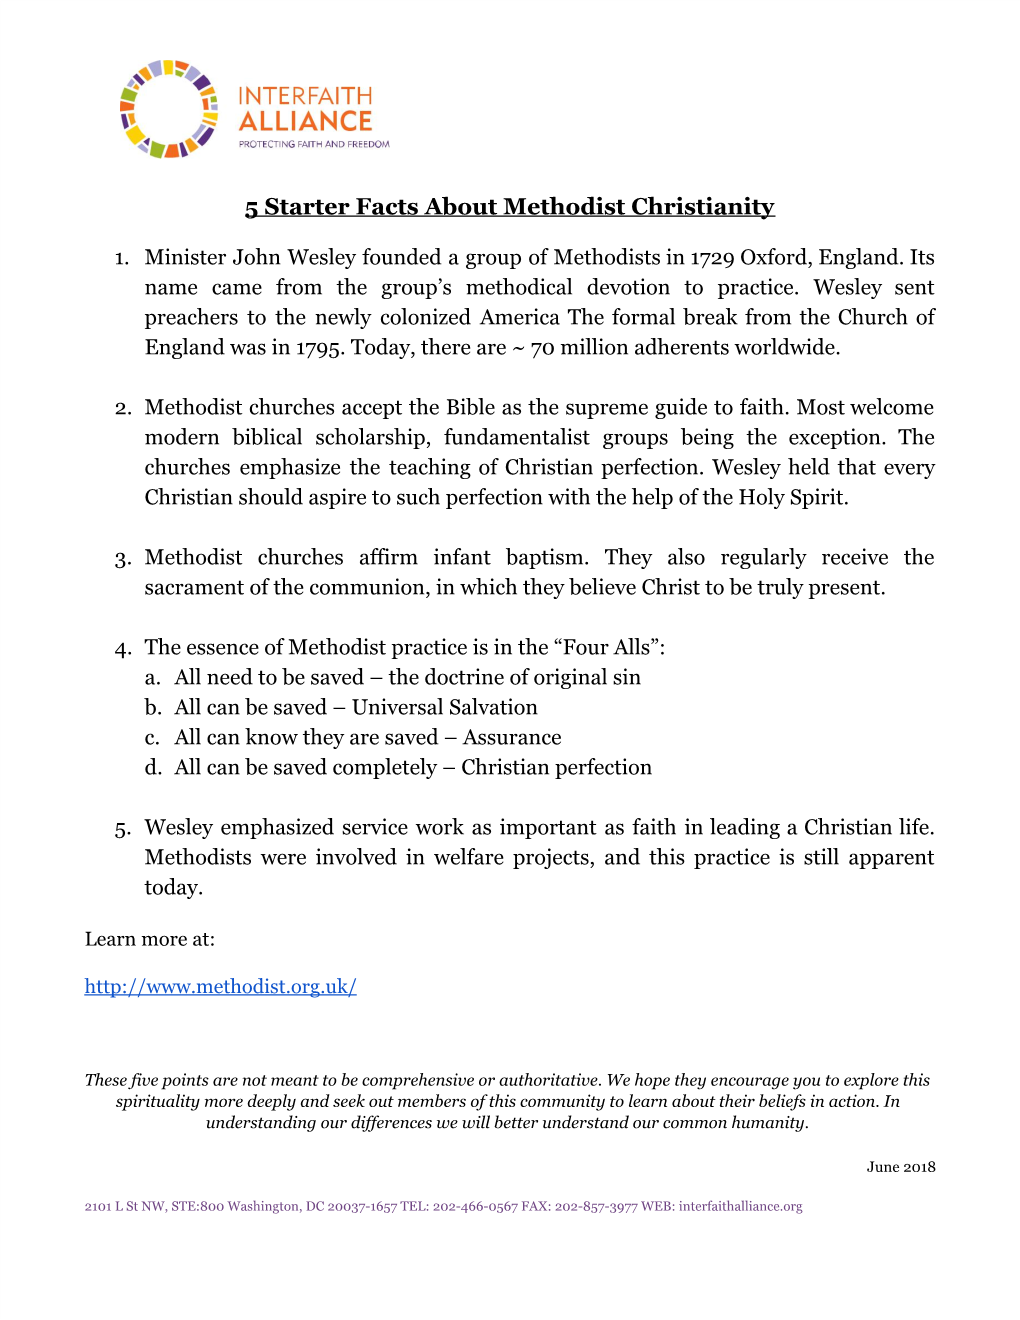 Methodist Christianity